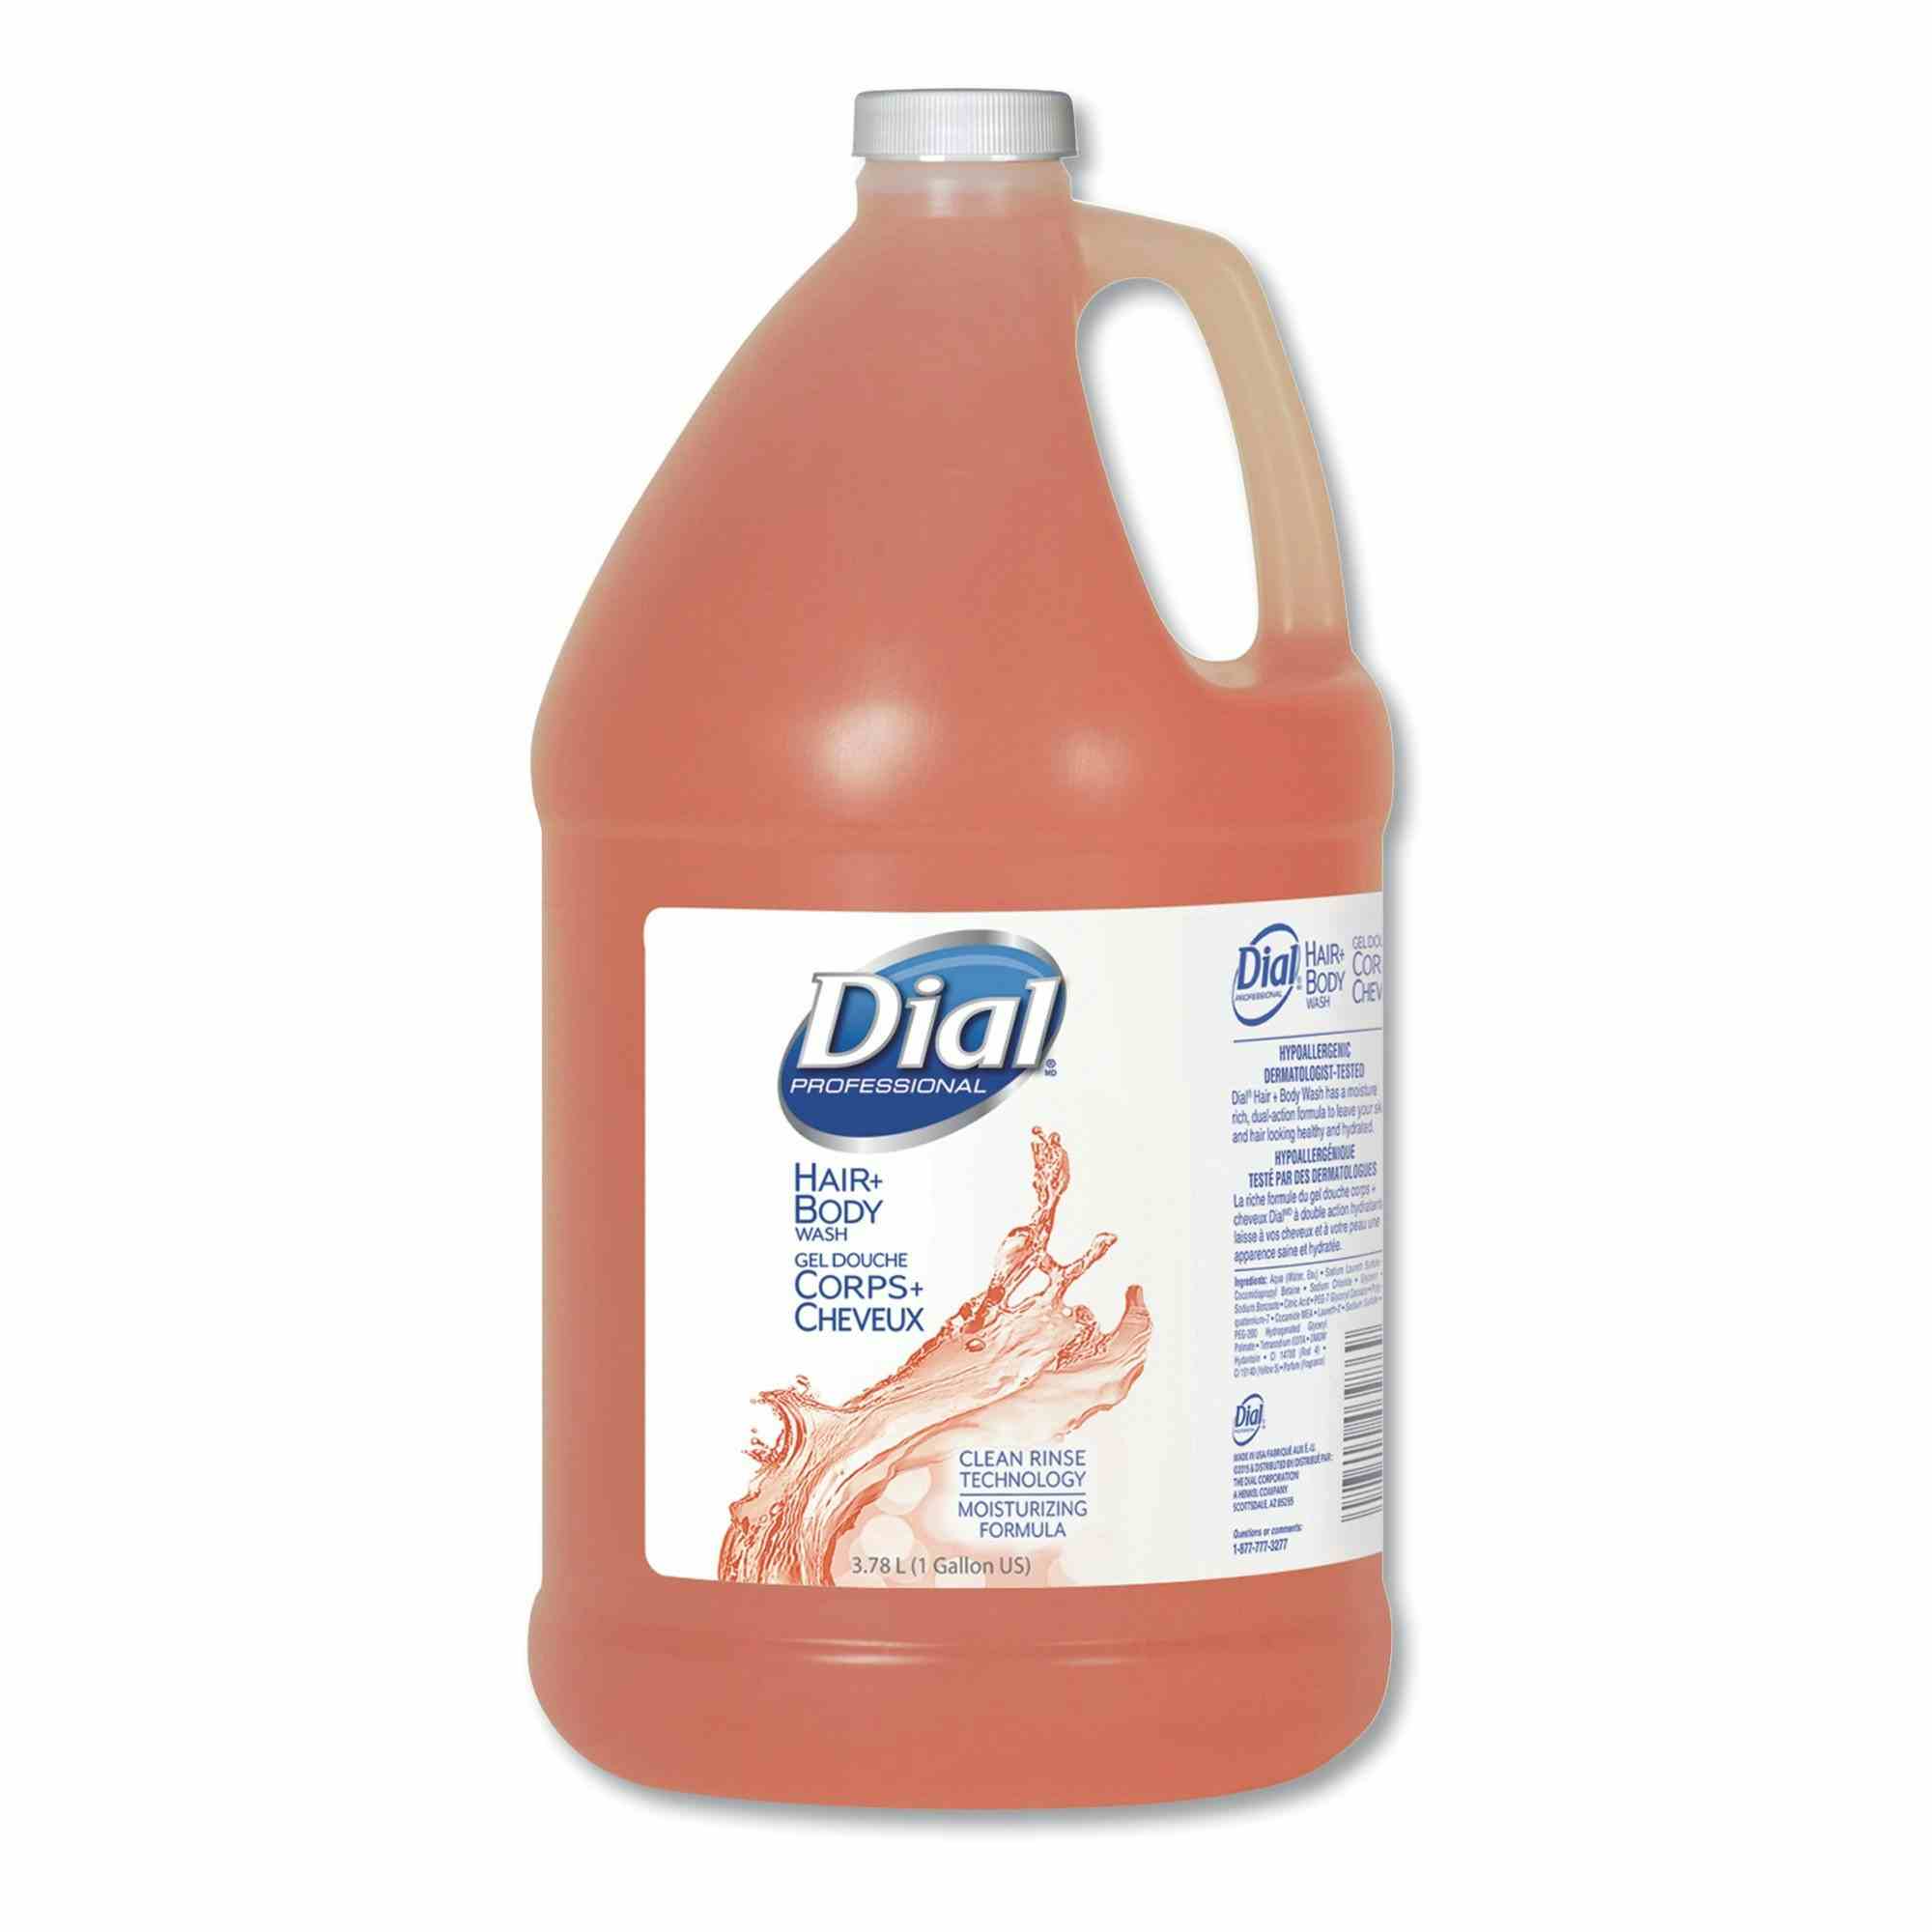 Dial Professional Hair and Body Wash, DIA03986, 1 gal. Jug - 1 Each